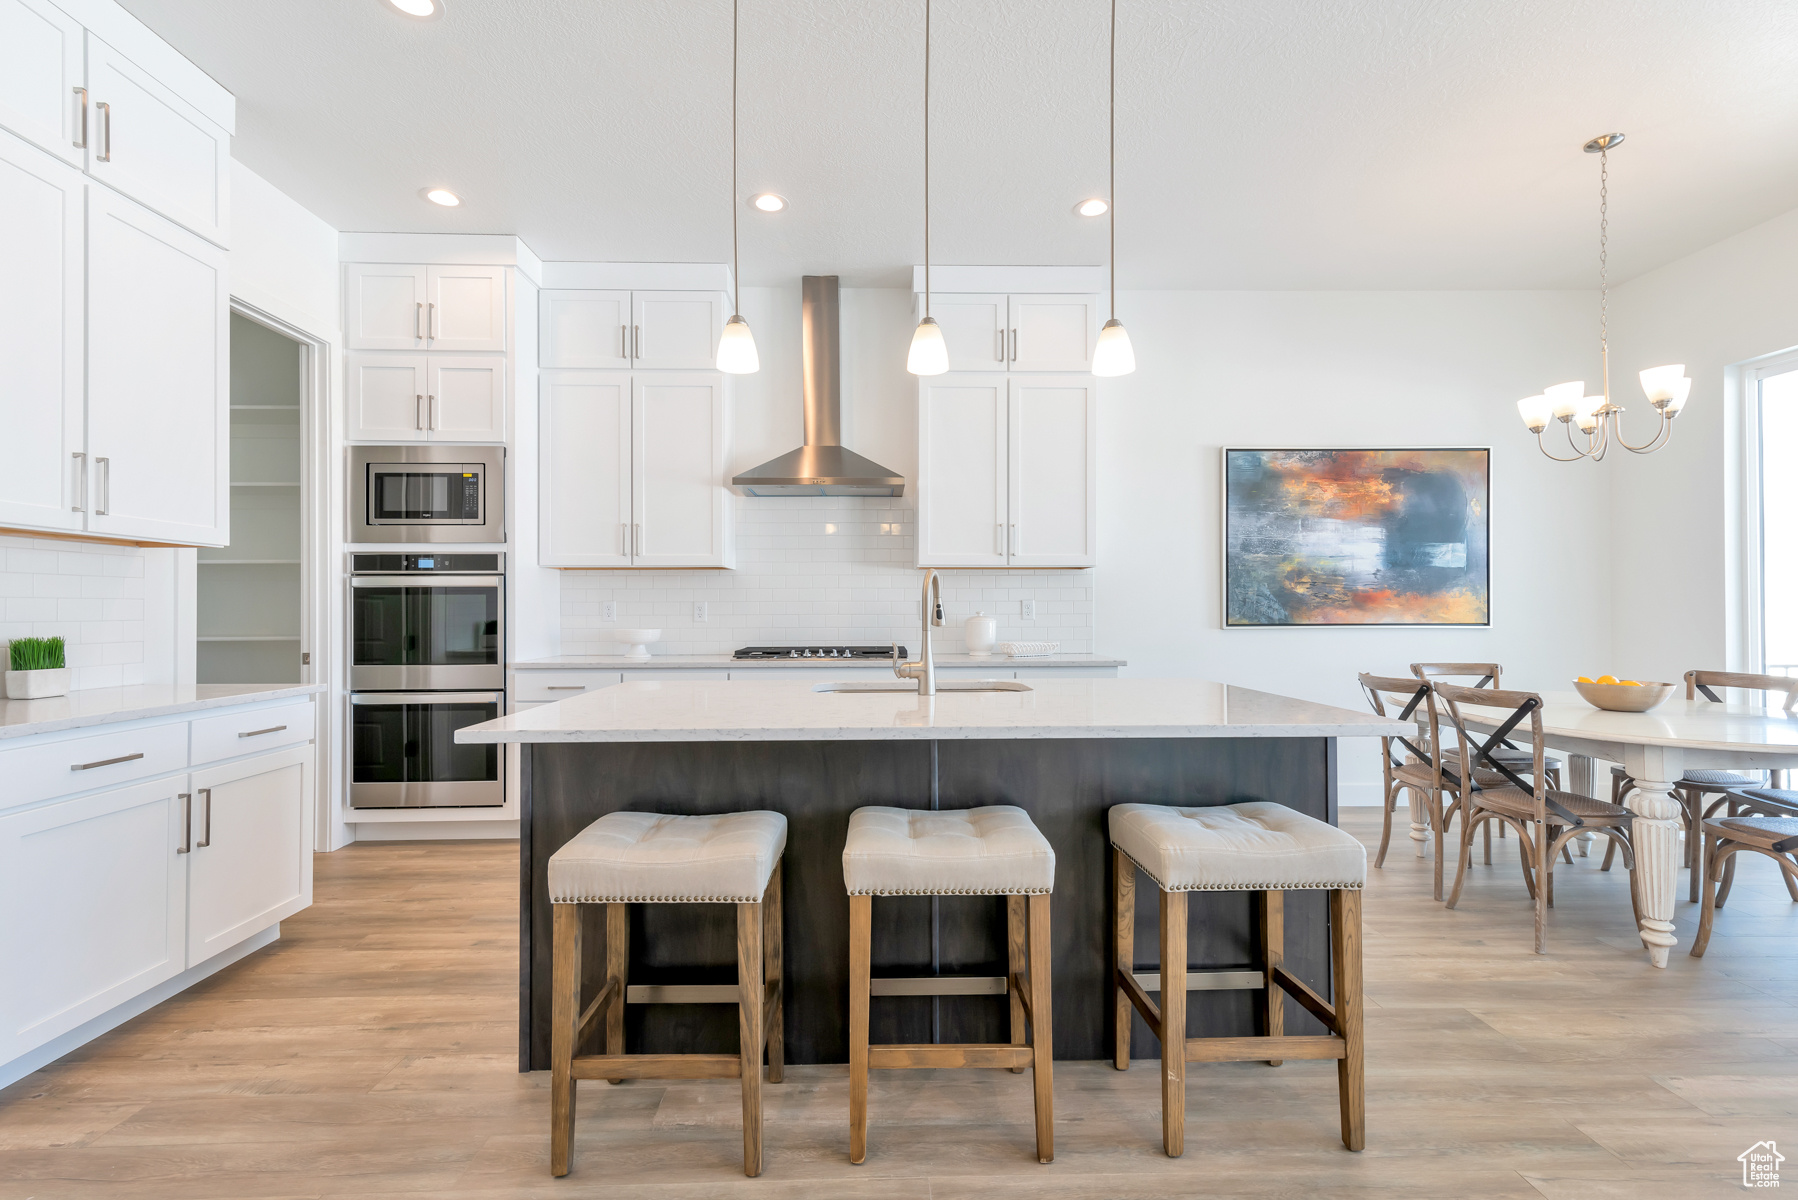 Kitchen featuring backsplash, light wood-type flooring, pendant lighting, and wall chimney range hood